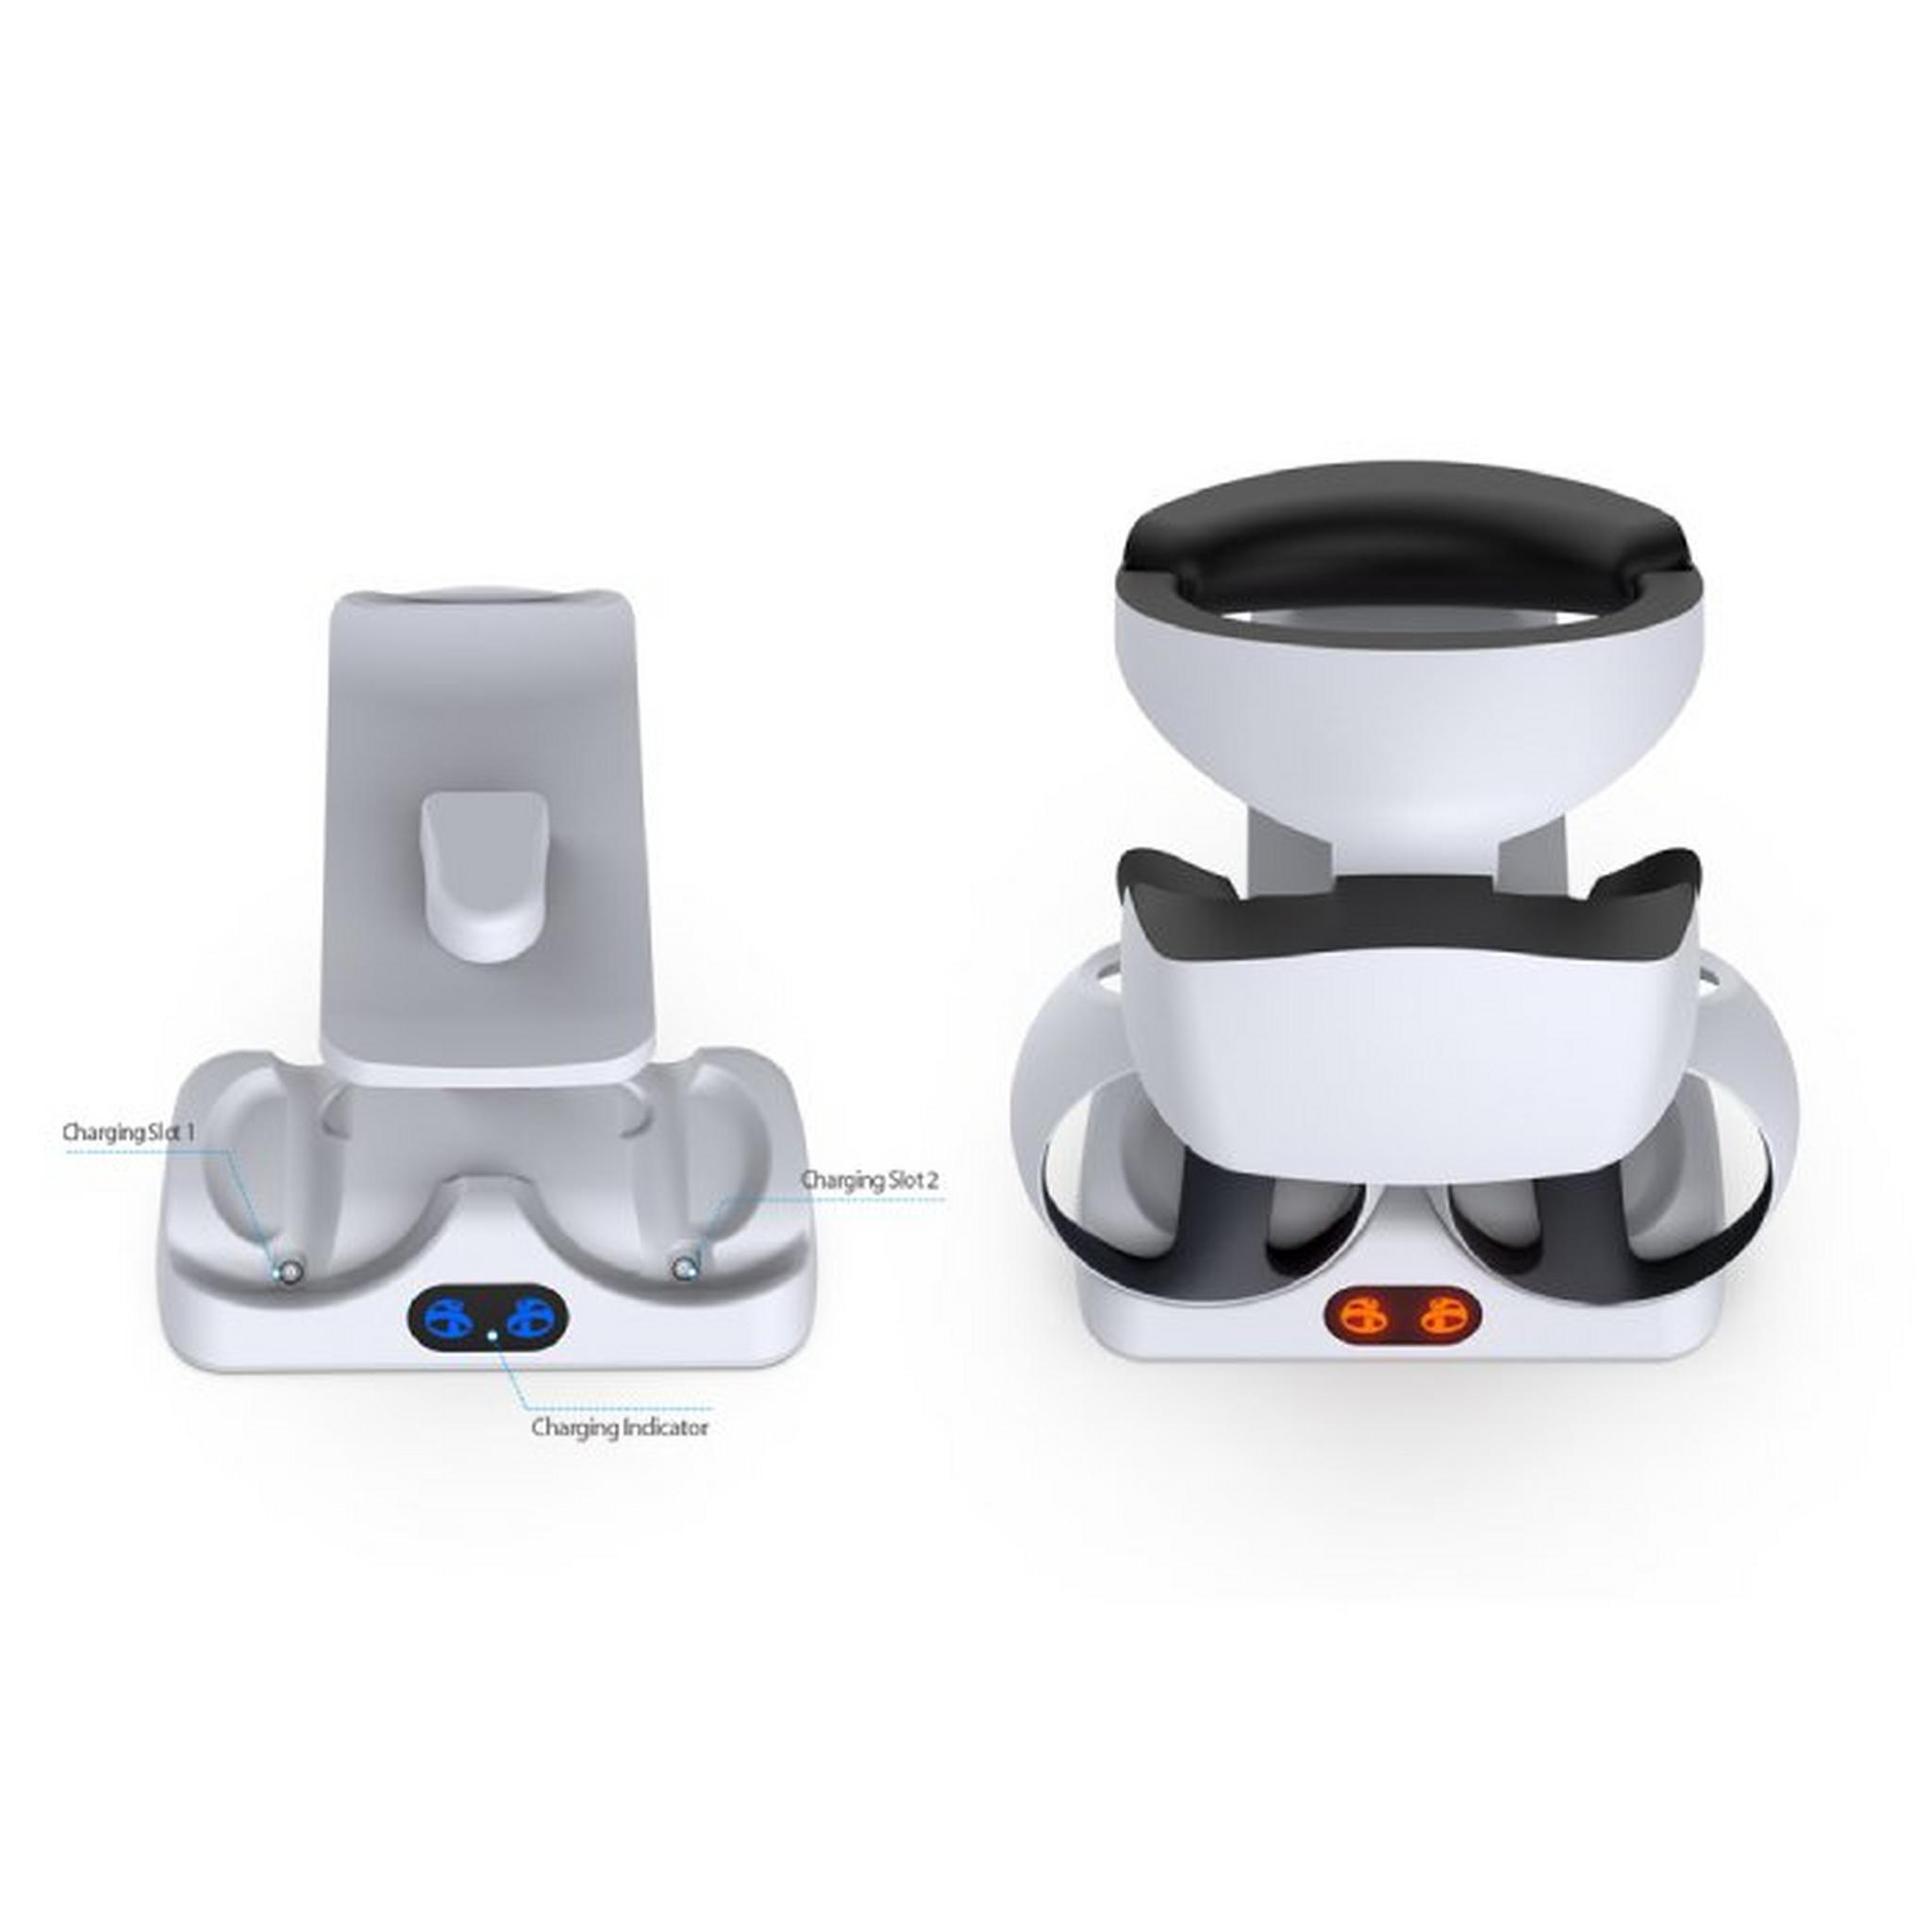 Dobe Charging Dock for Playstation 5 VR, TP5-2515 – White